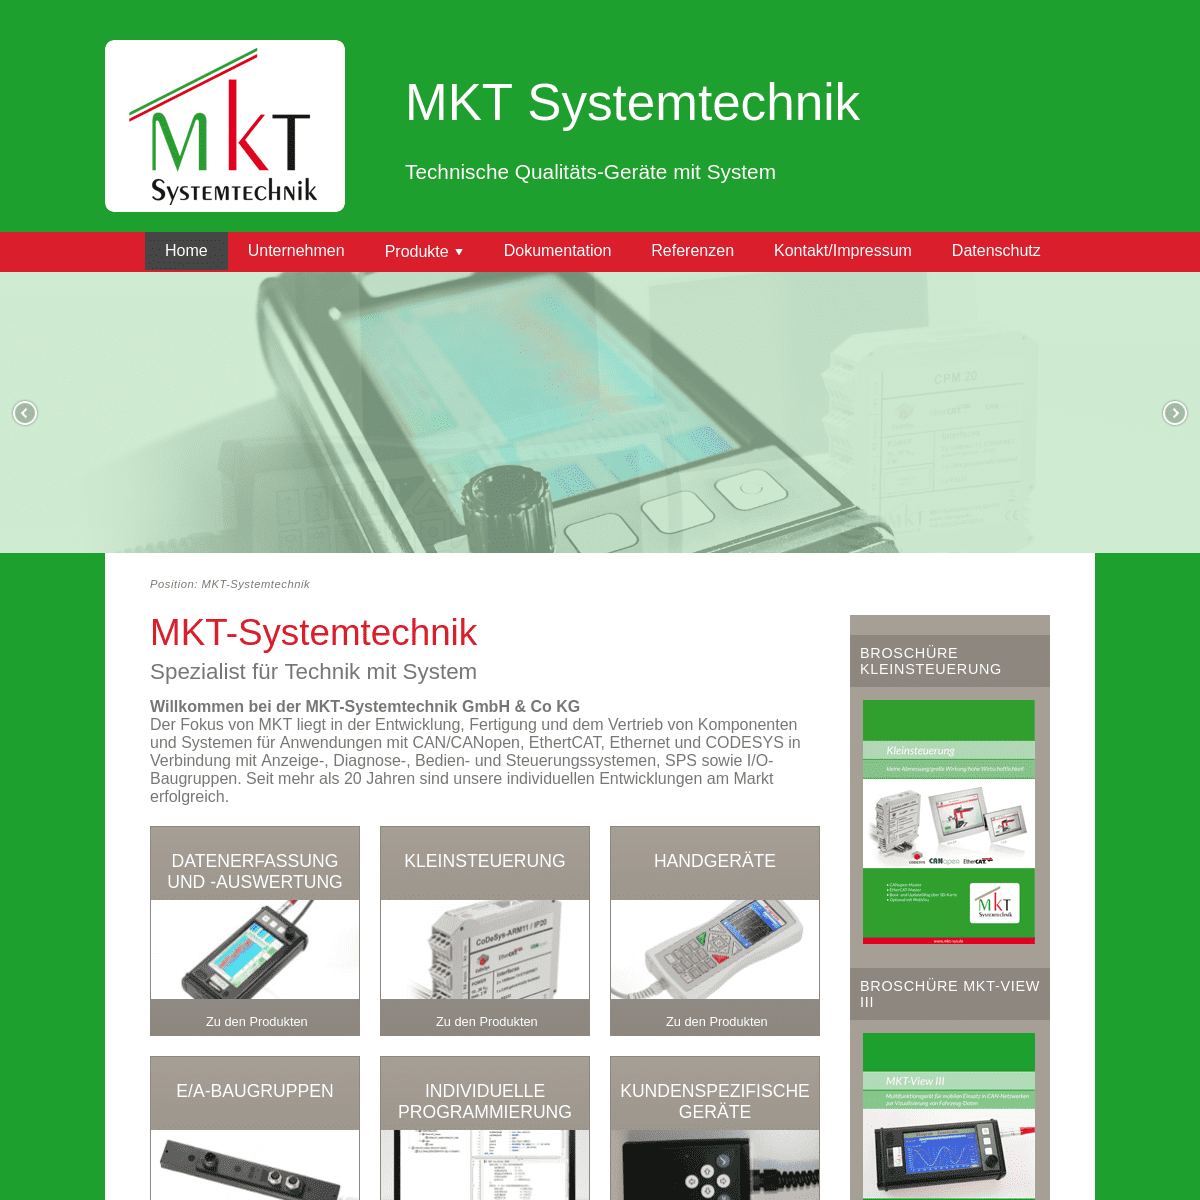 A complete backup of mkt-sys.de